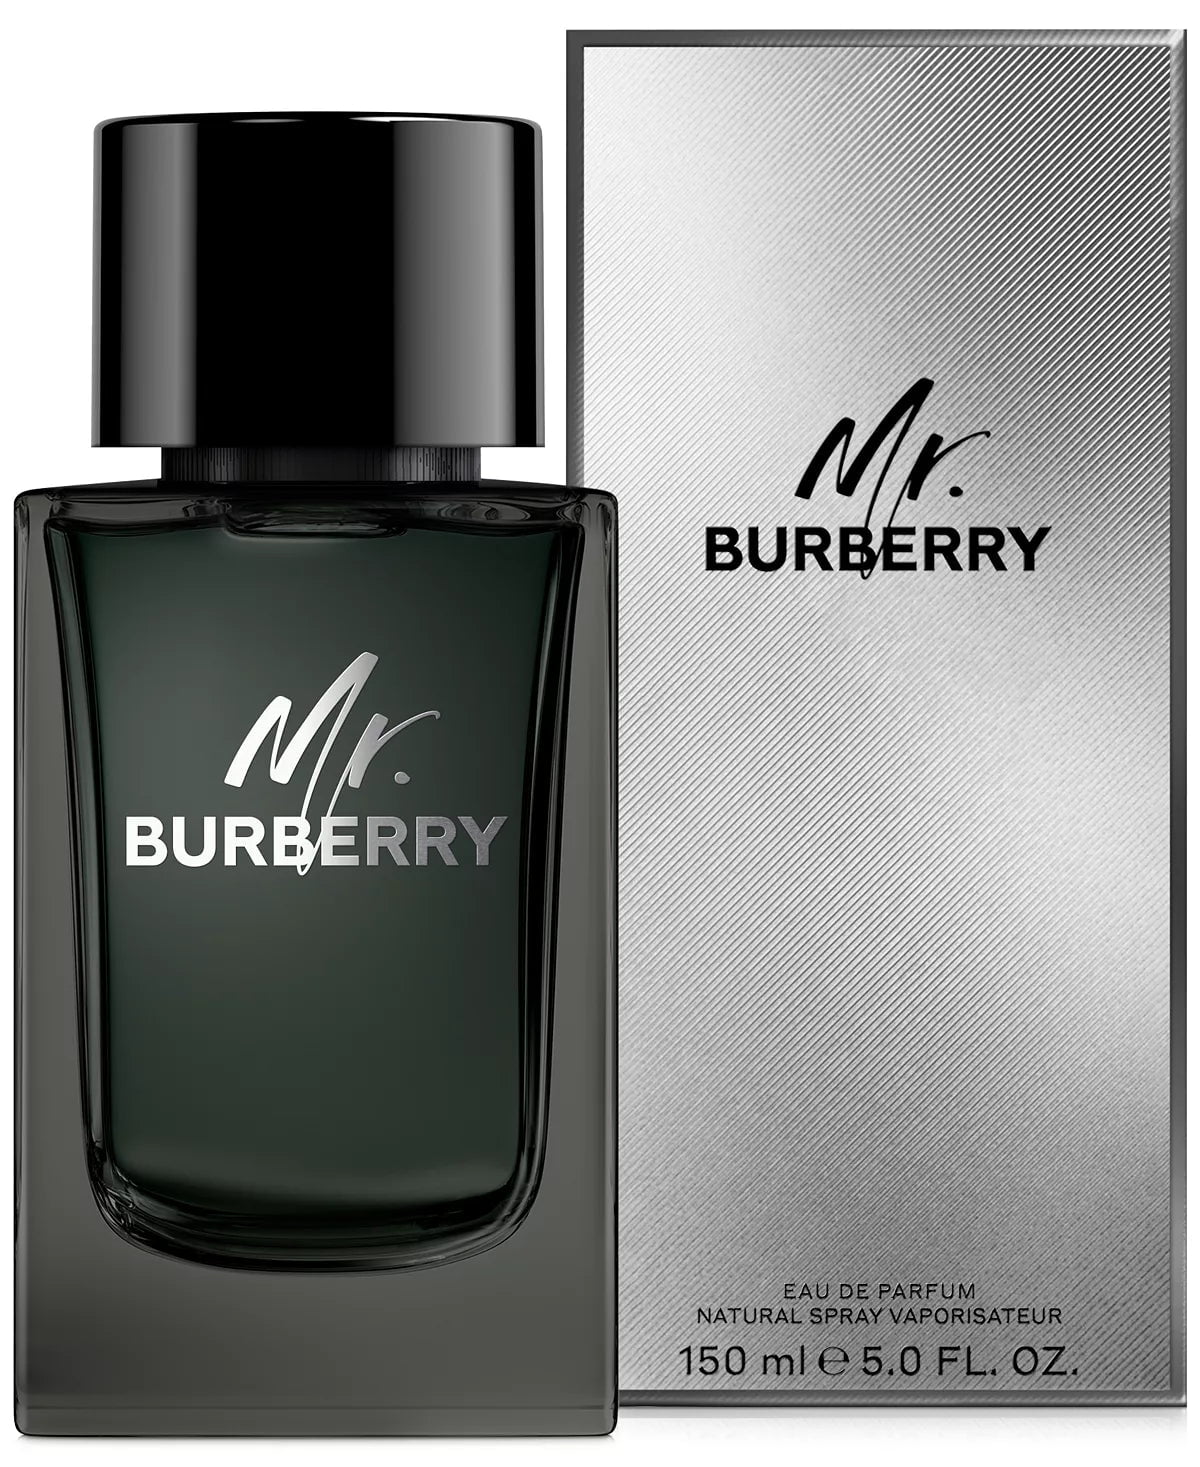 MR. BURBERRY BY BURBERRY FOR MEN -  Eau De Parfum SPRAY, Product image 1